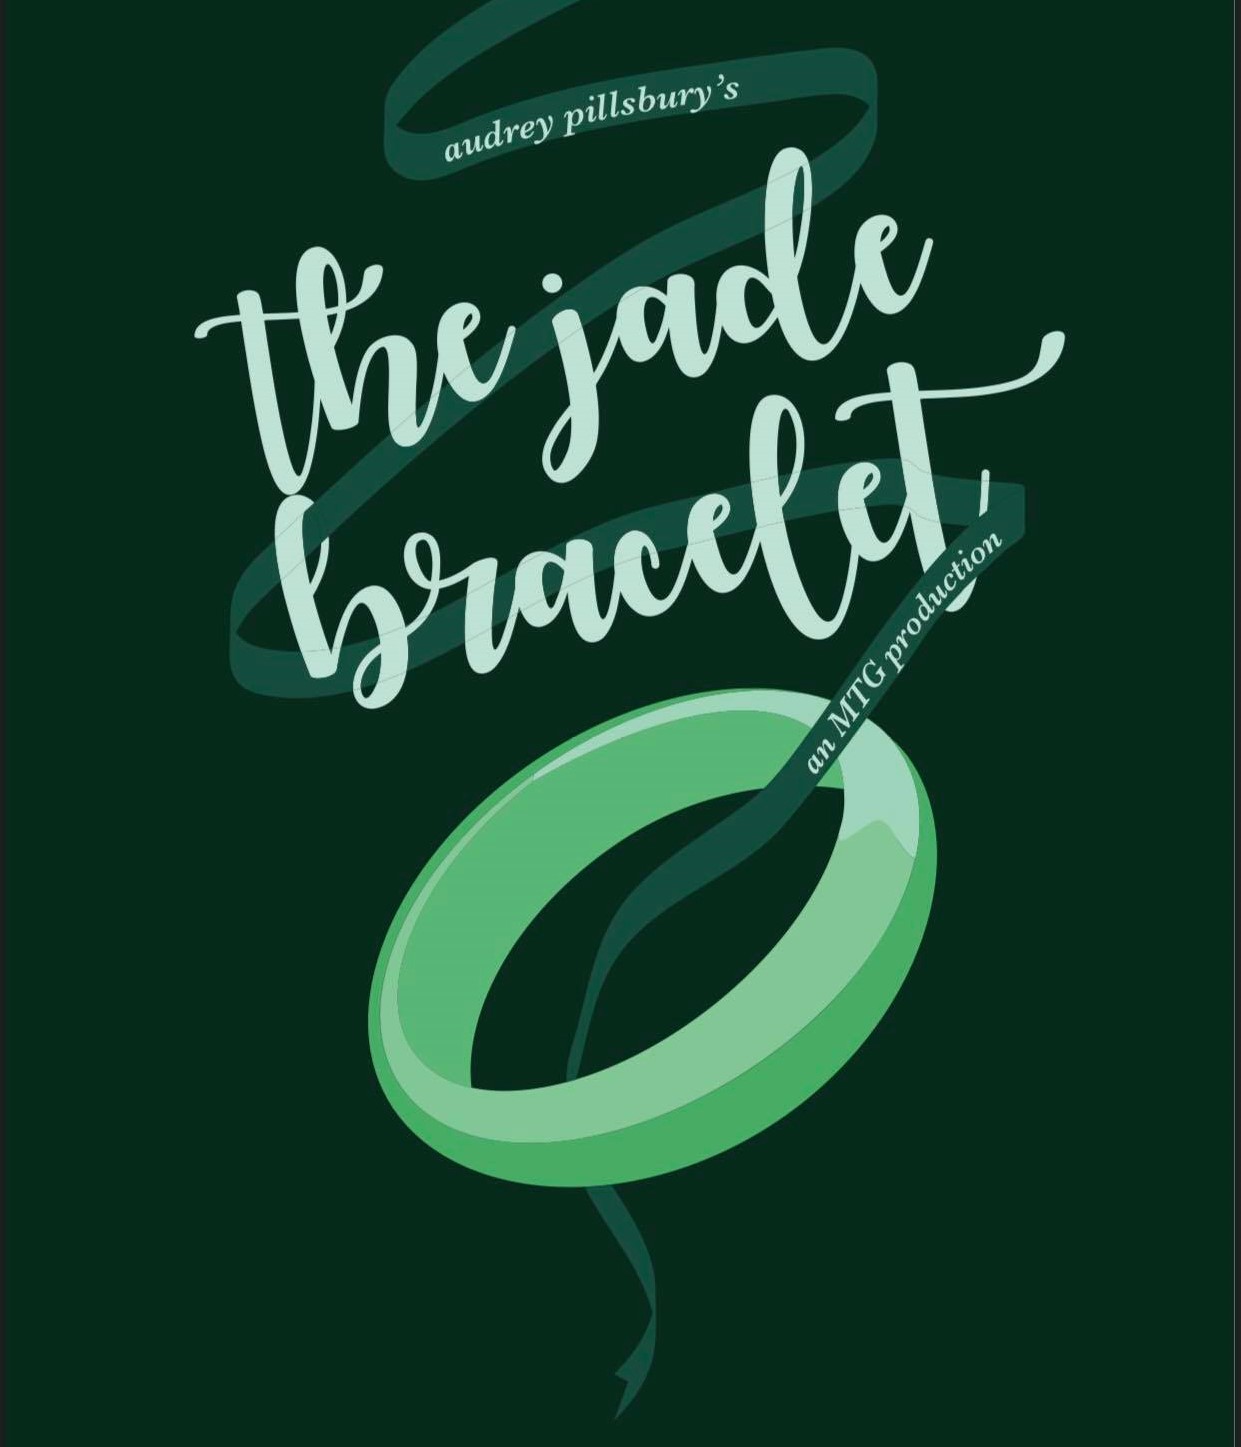 The Jade Bracelet